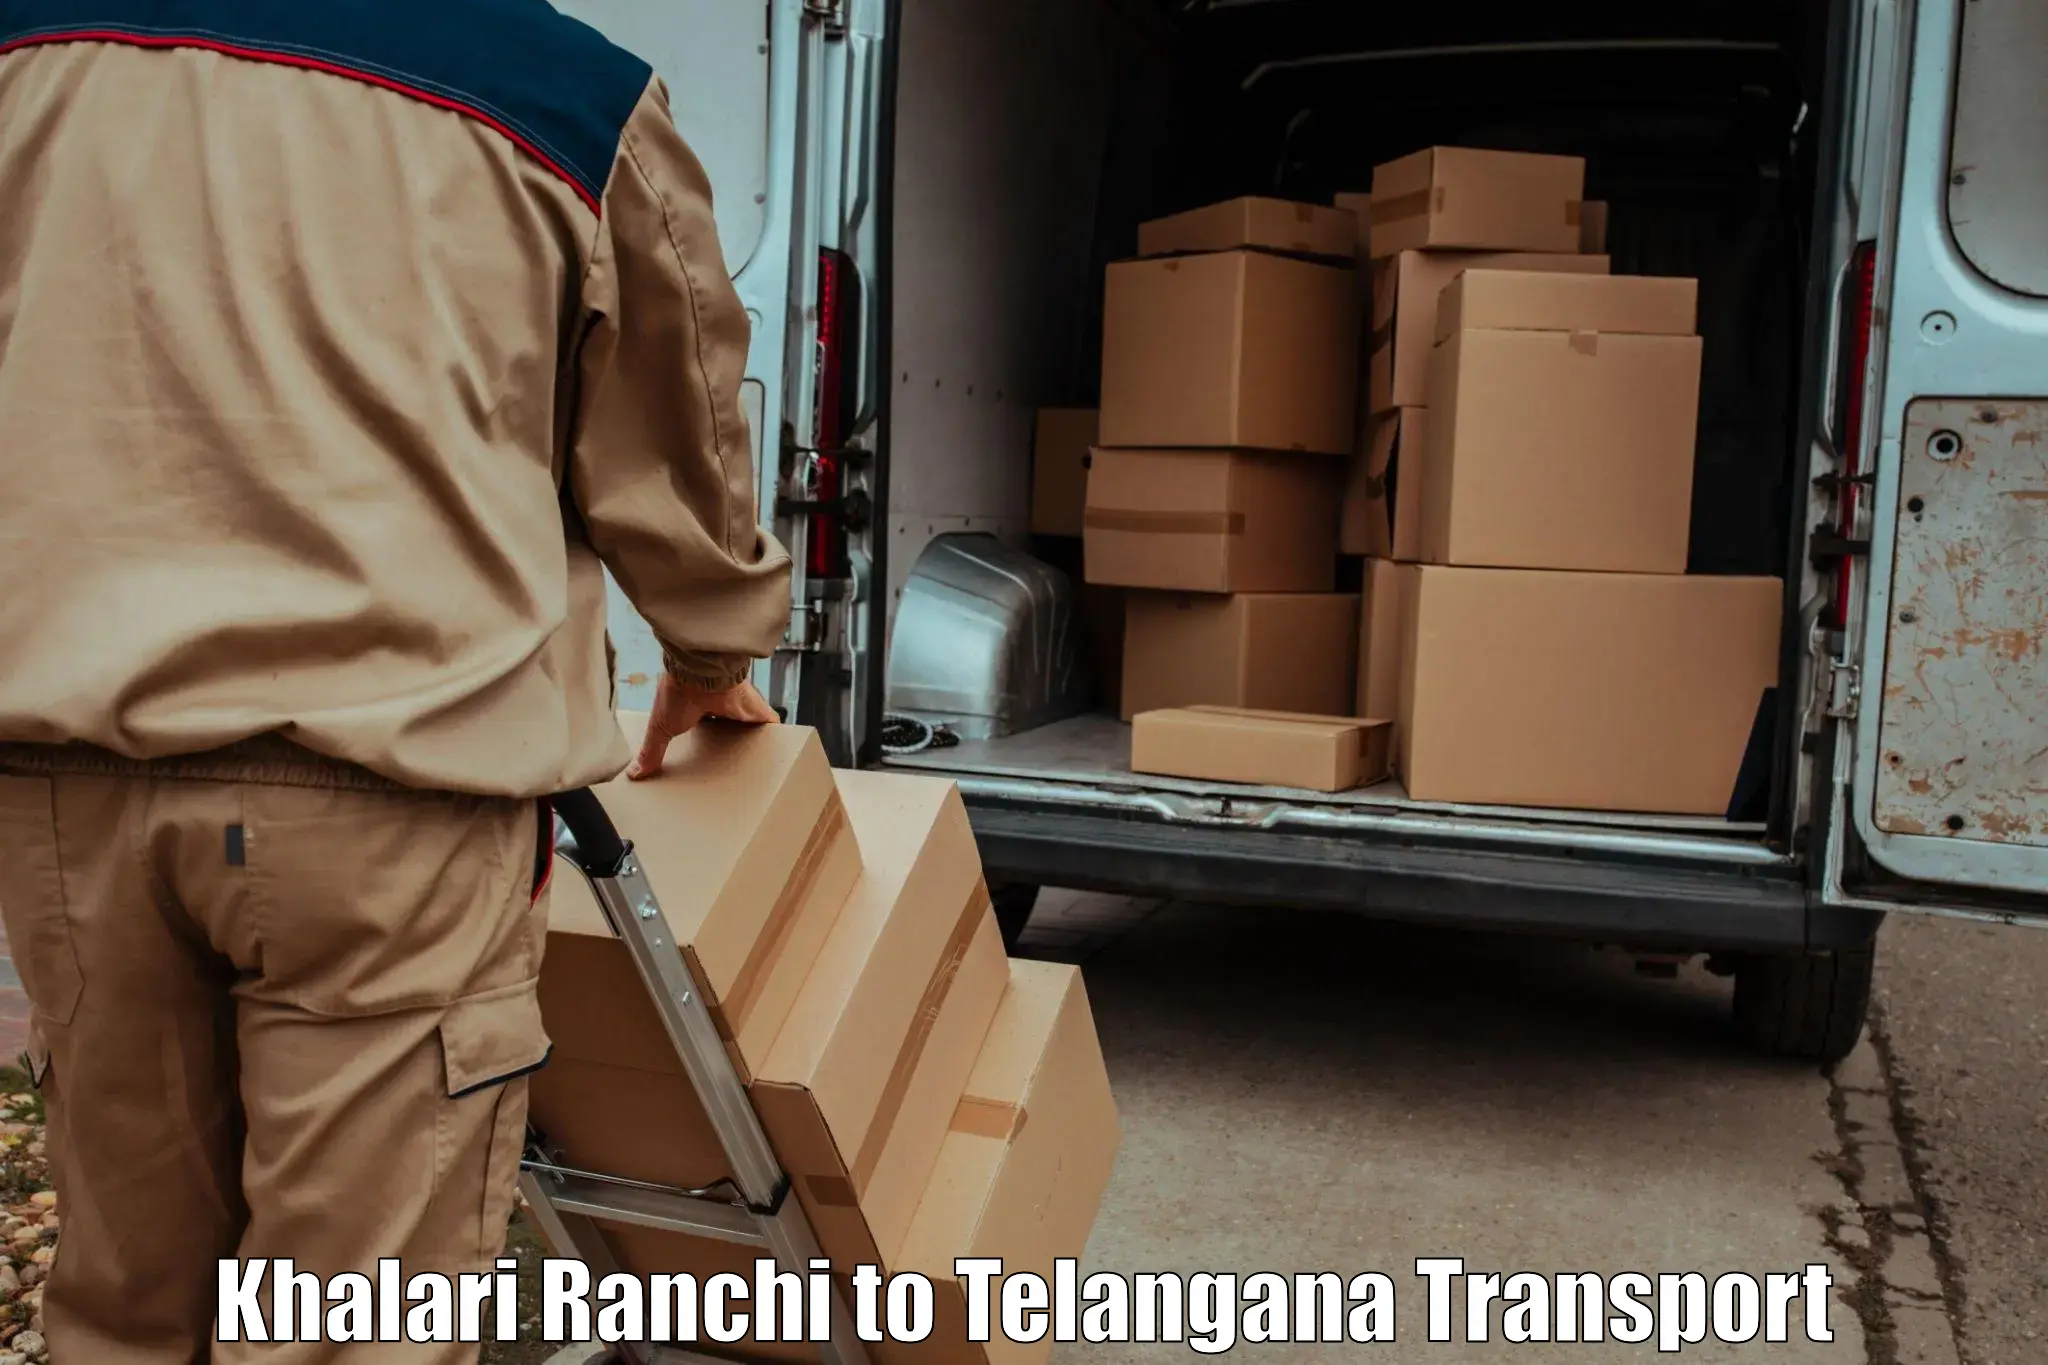 International cargo transportation services Khalari Ranchi to Ghanpur